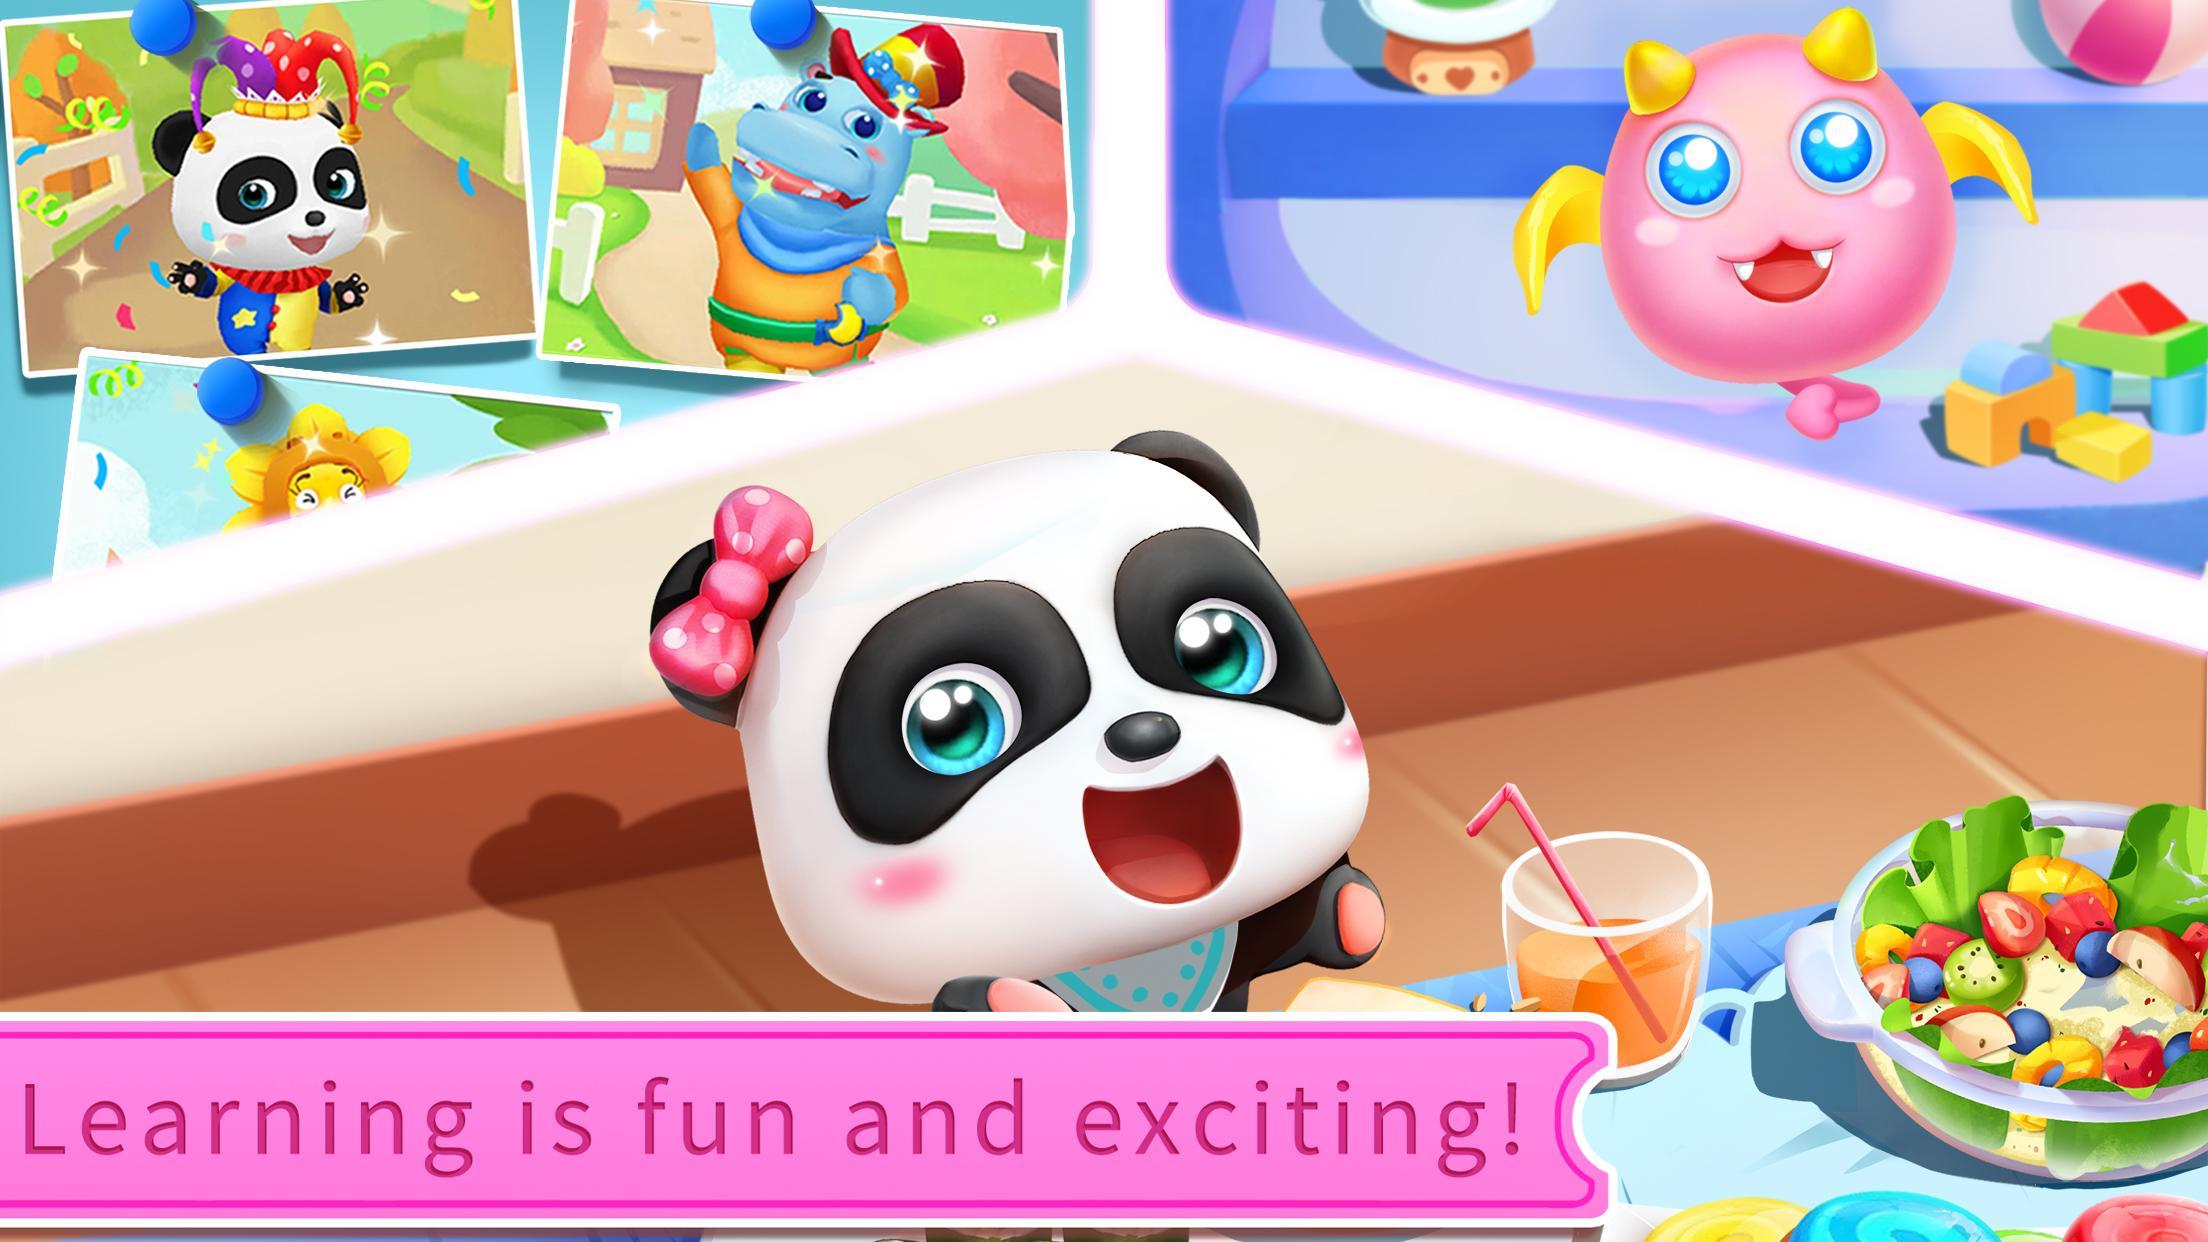 Baby Panda’s School Bus - Let's Drive! 8.51.00.03 Screenshot 17